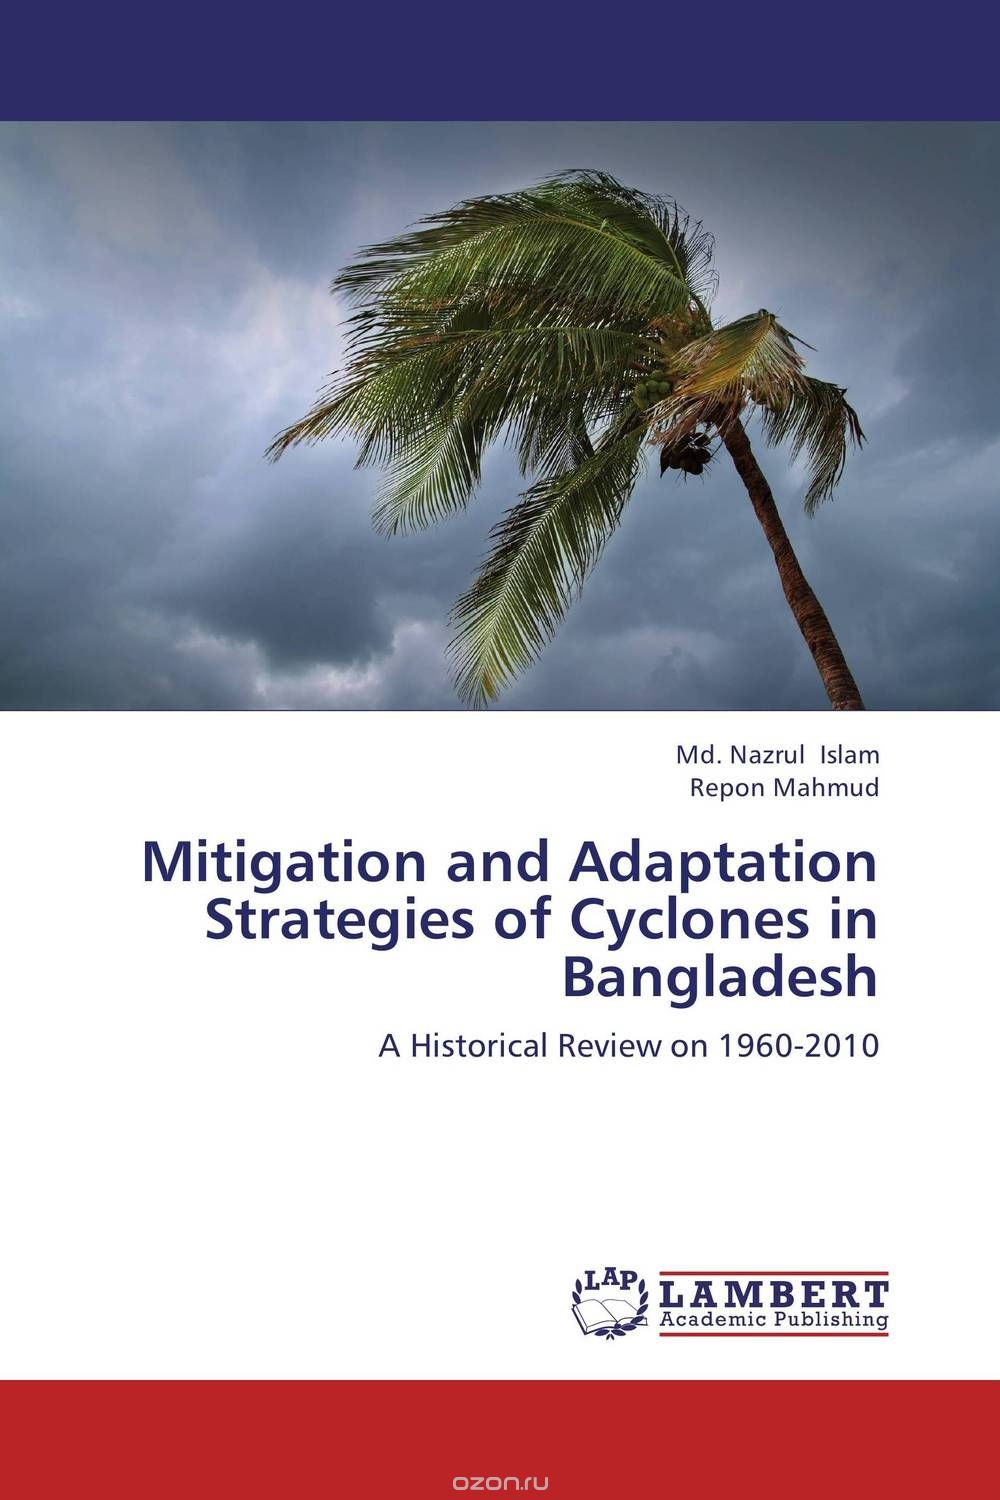 Скачать книгу "Mitigation and Adaptation Strategies of Cyclones in Bangladesh"